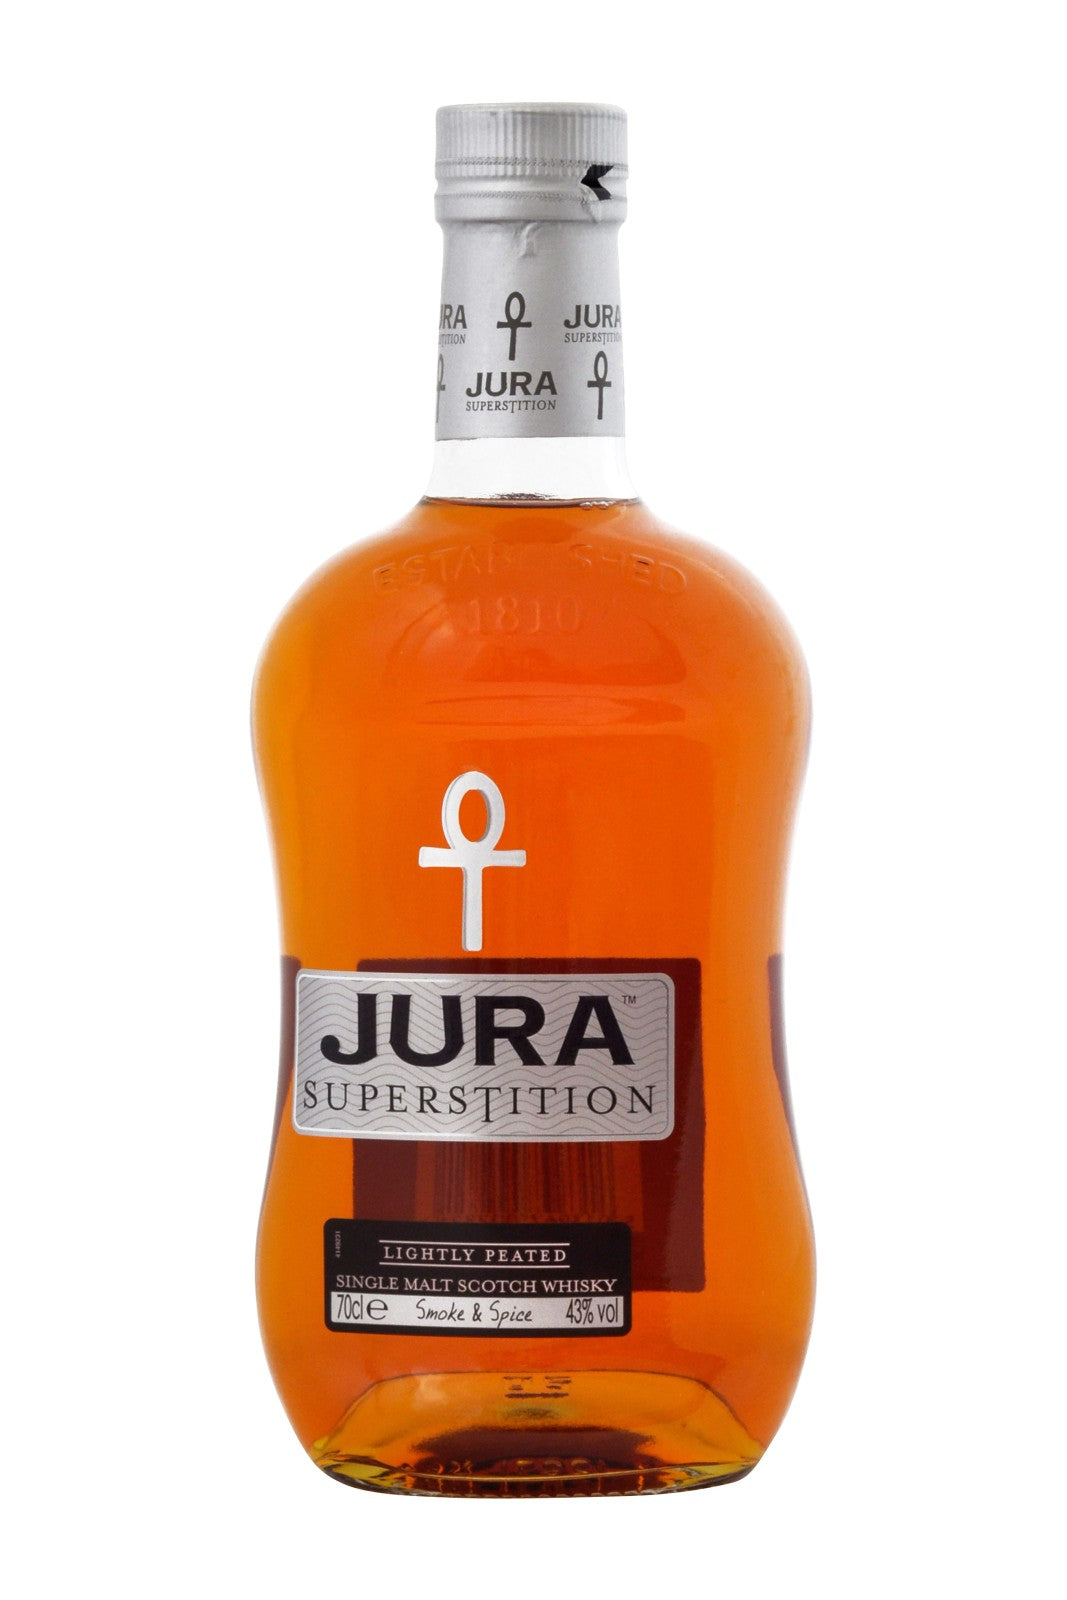 Isle of Jura Superstition